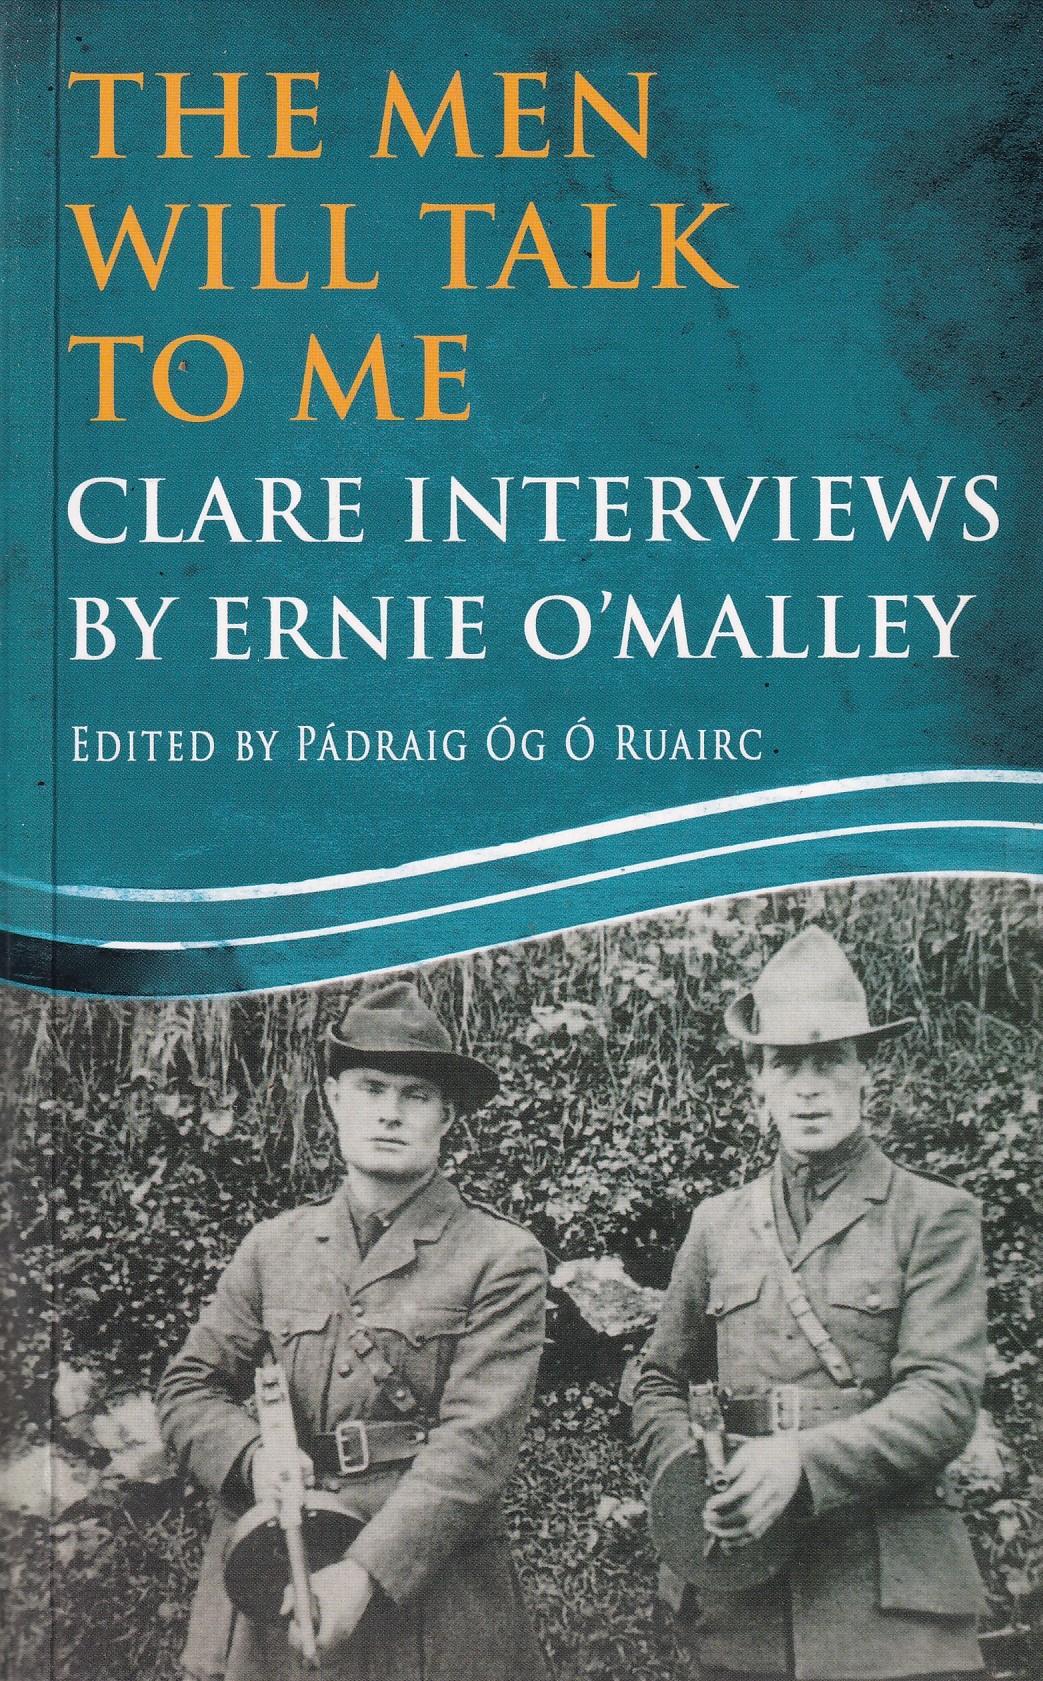 The Men Will Talk to Me : Clare Interviews by Ernie O’Malley by Ernie O'Malley (ed. Pádraig Óg Ó Ruairc)